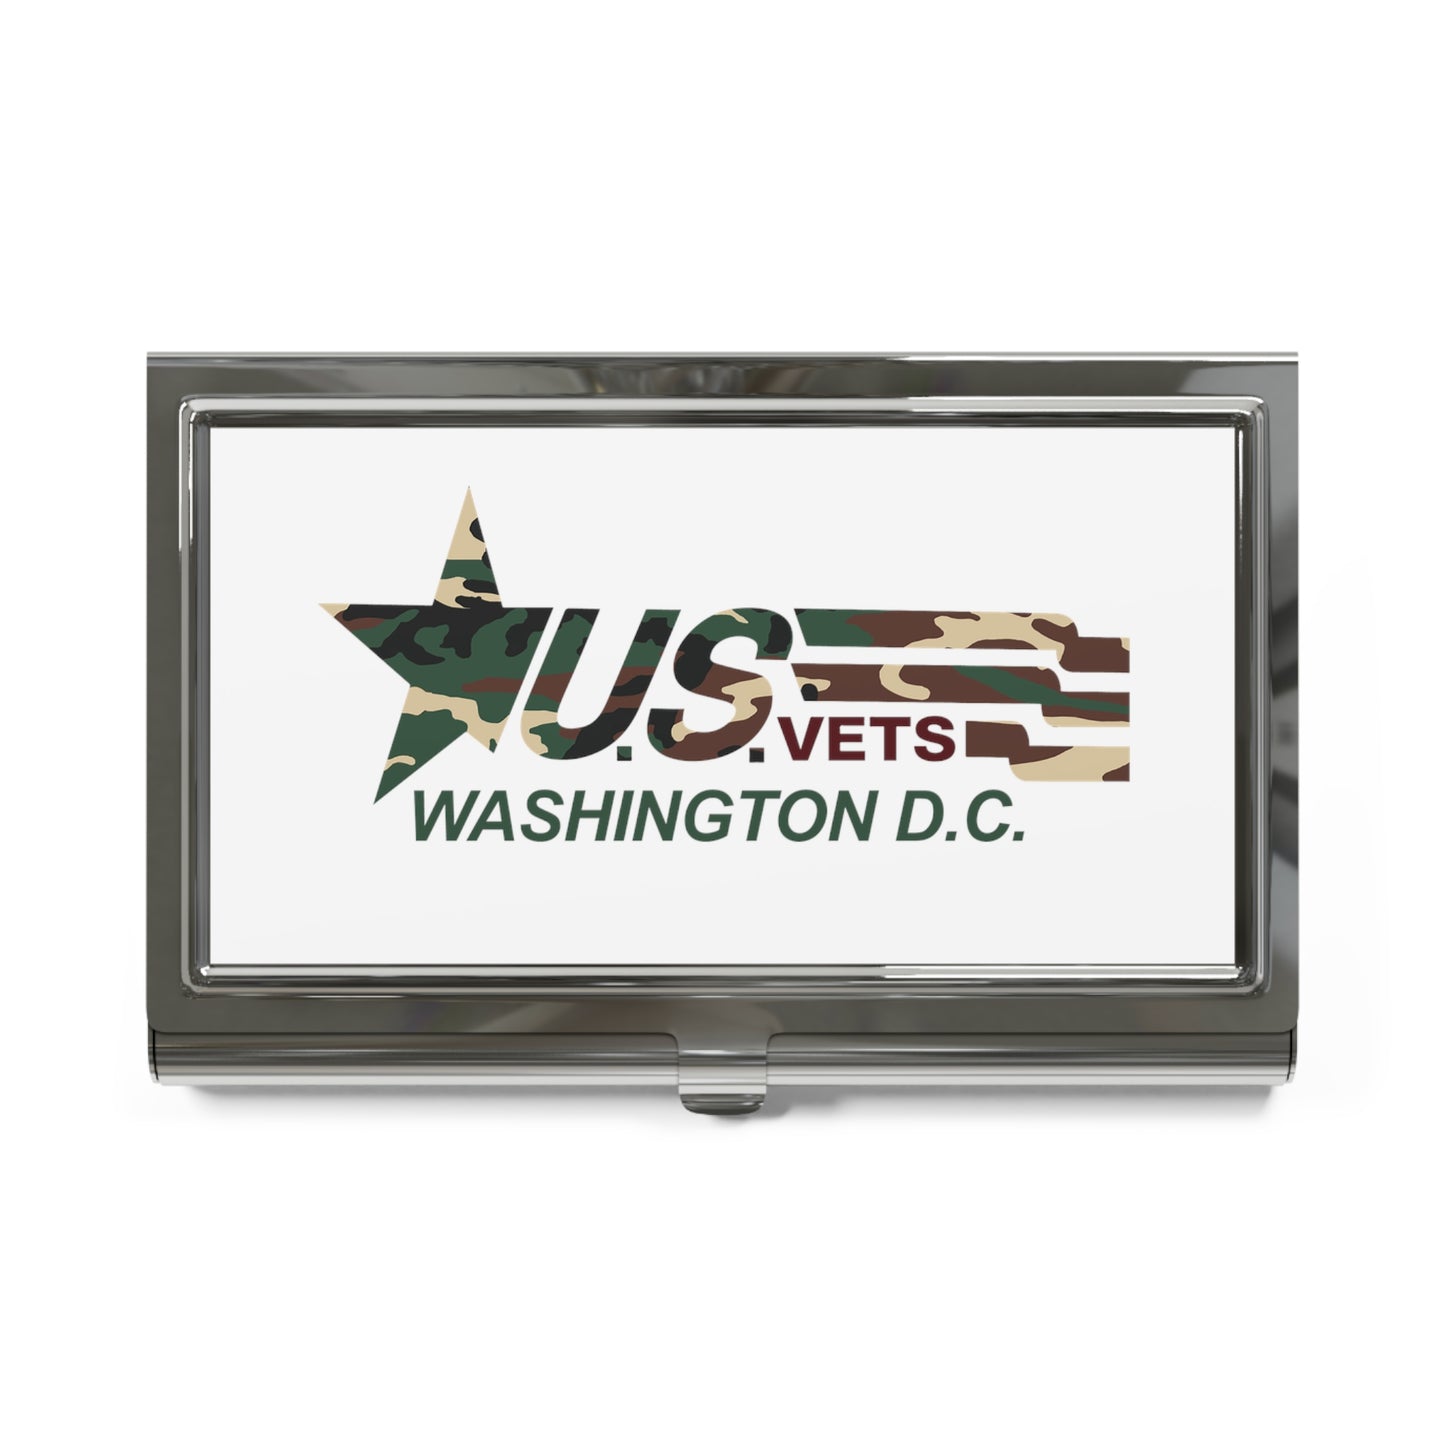 WASHINGTON D.C. - Business Card Holder